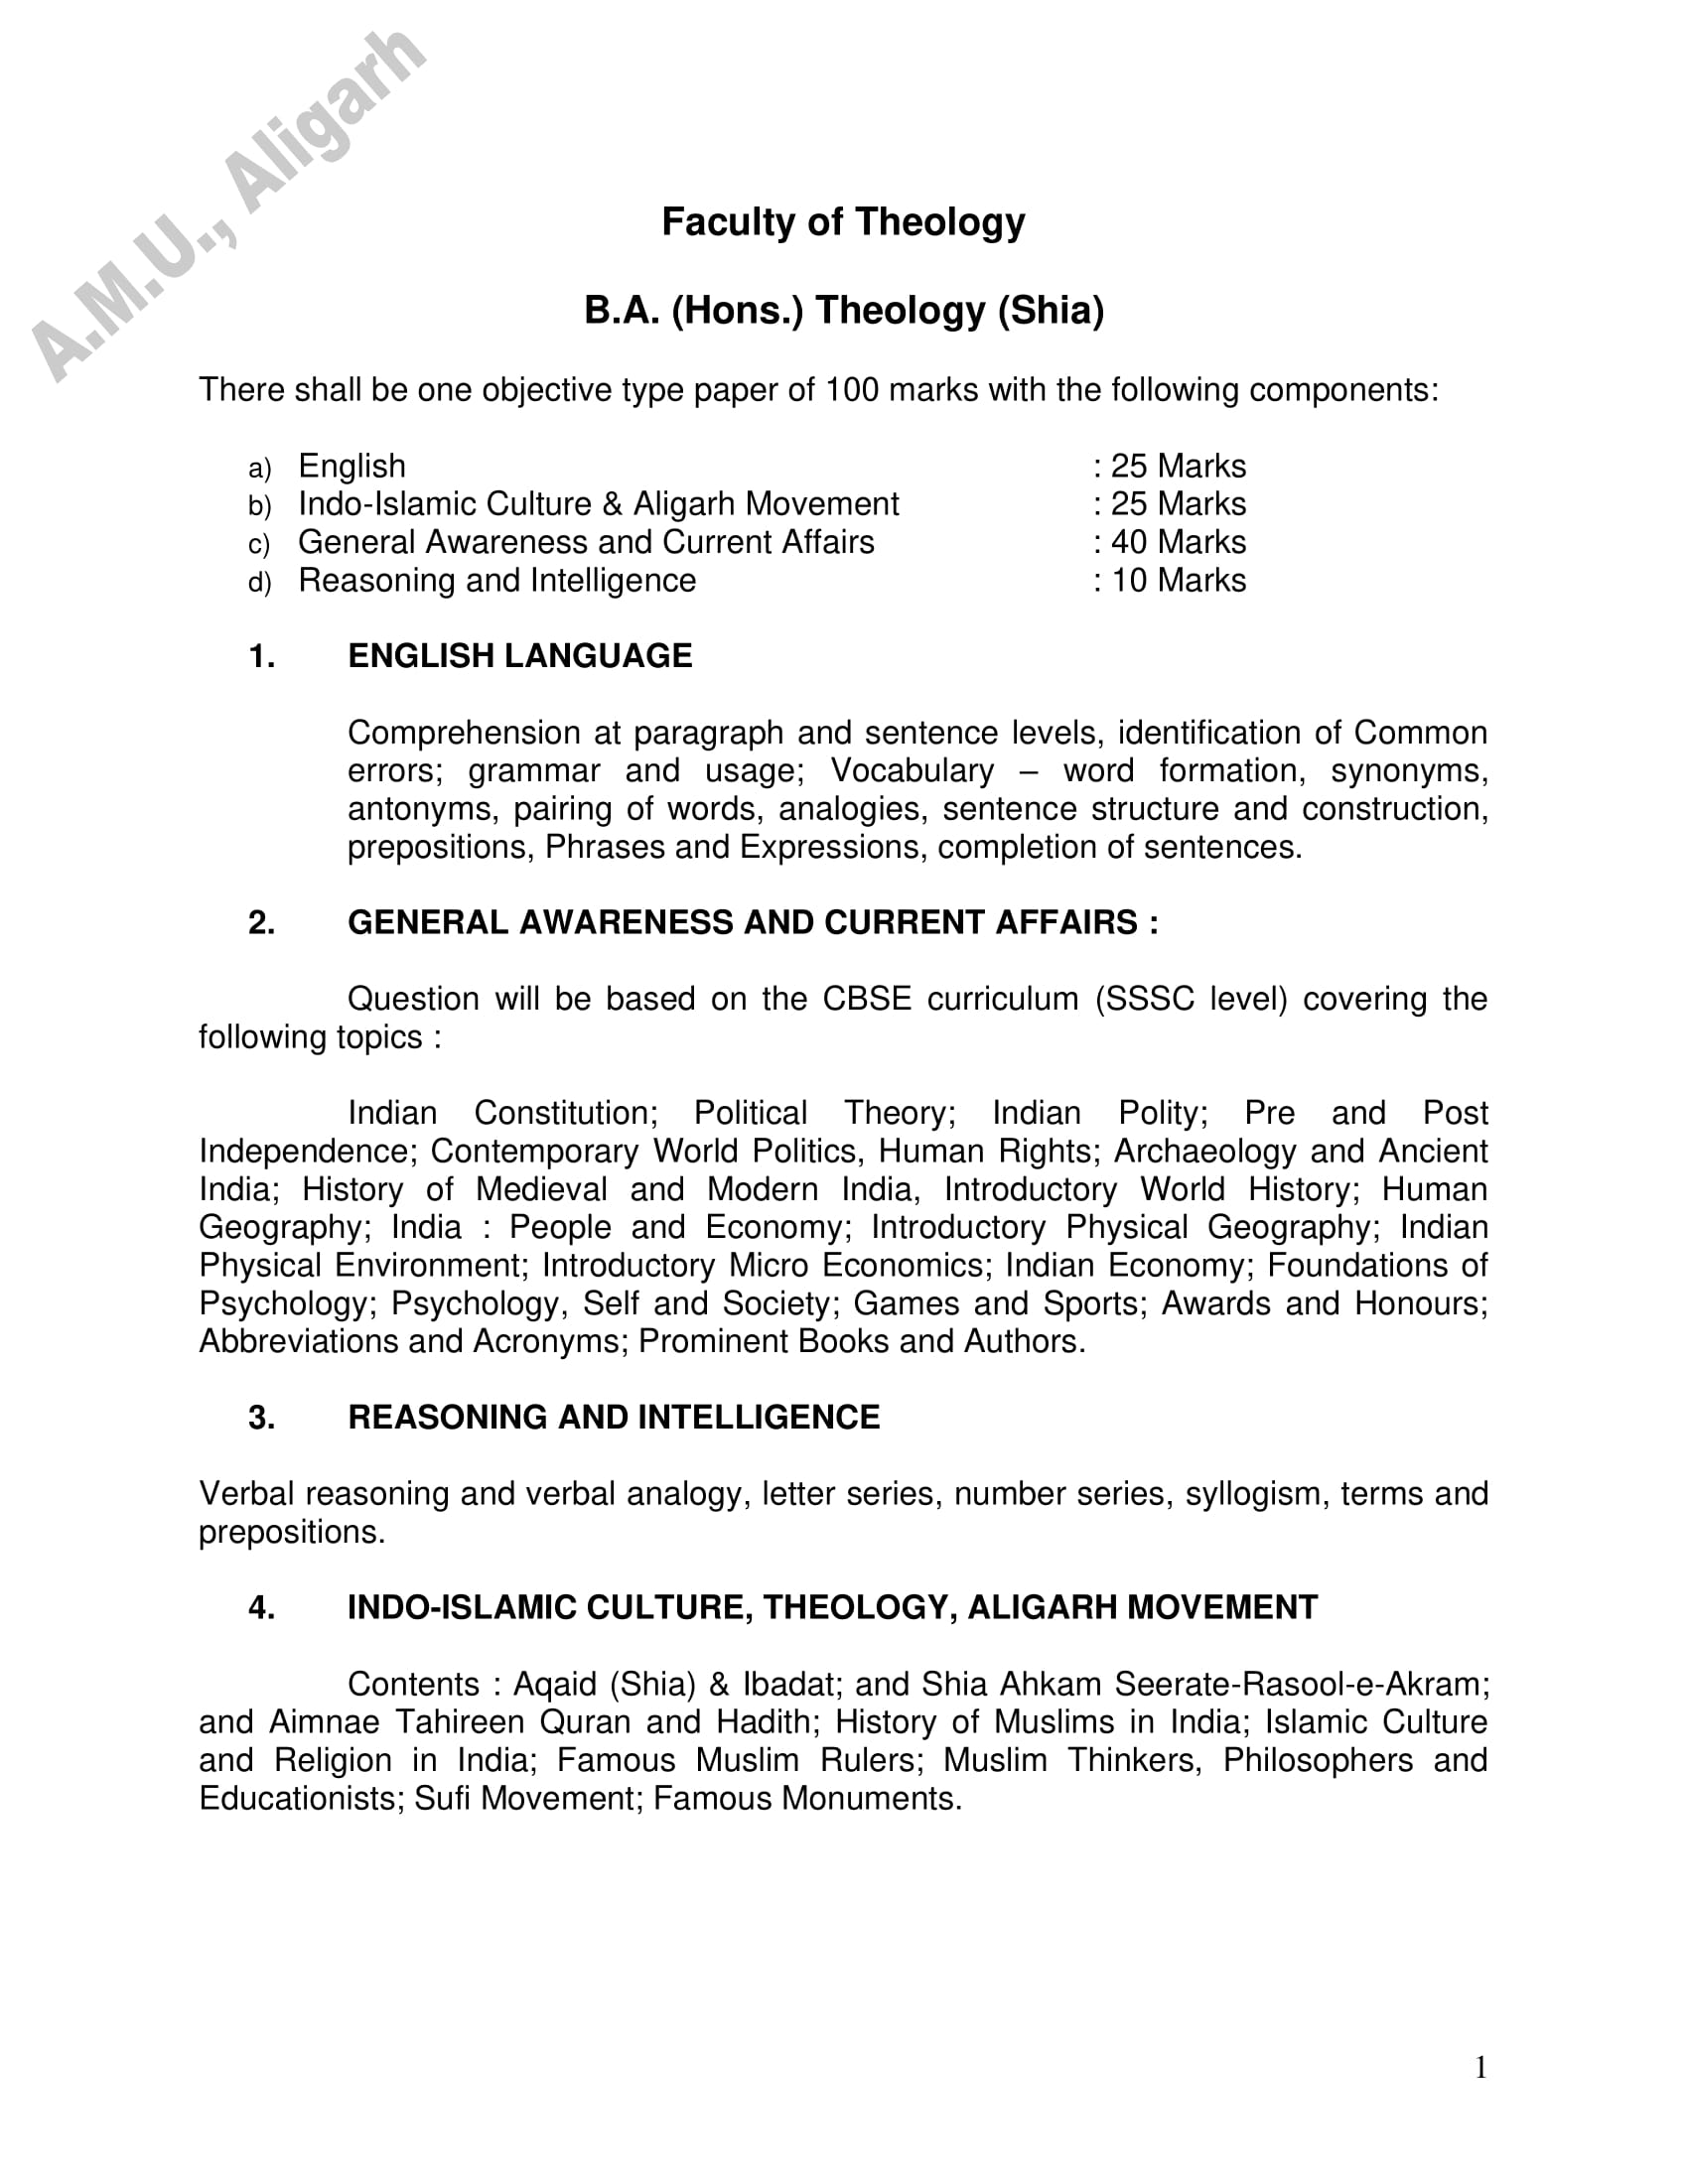 AMU Entrance Exam Syllabus for BA (Hons.) in Theology (Shia) - Page 1